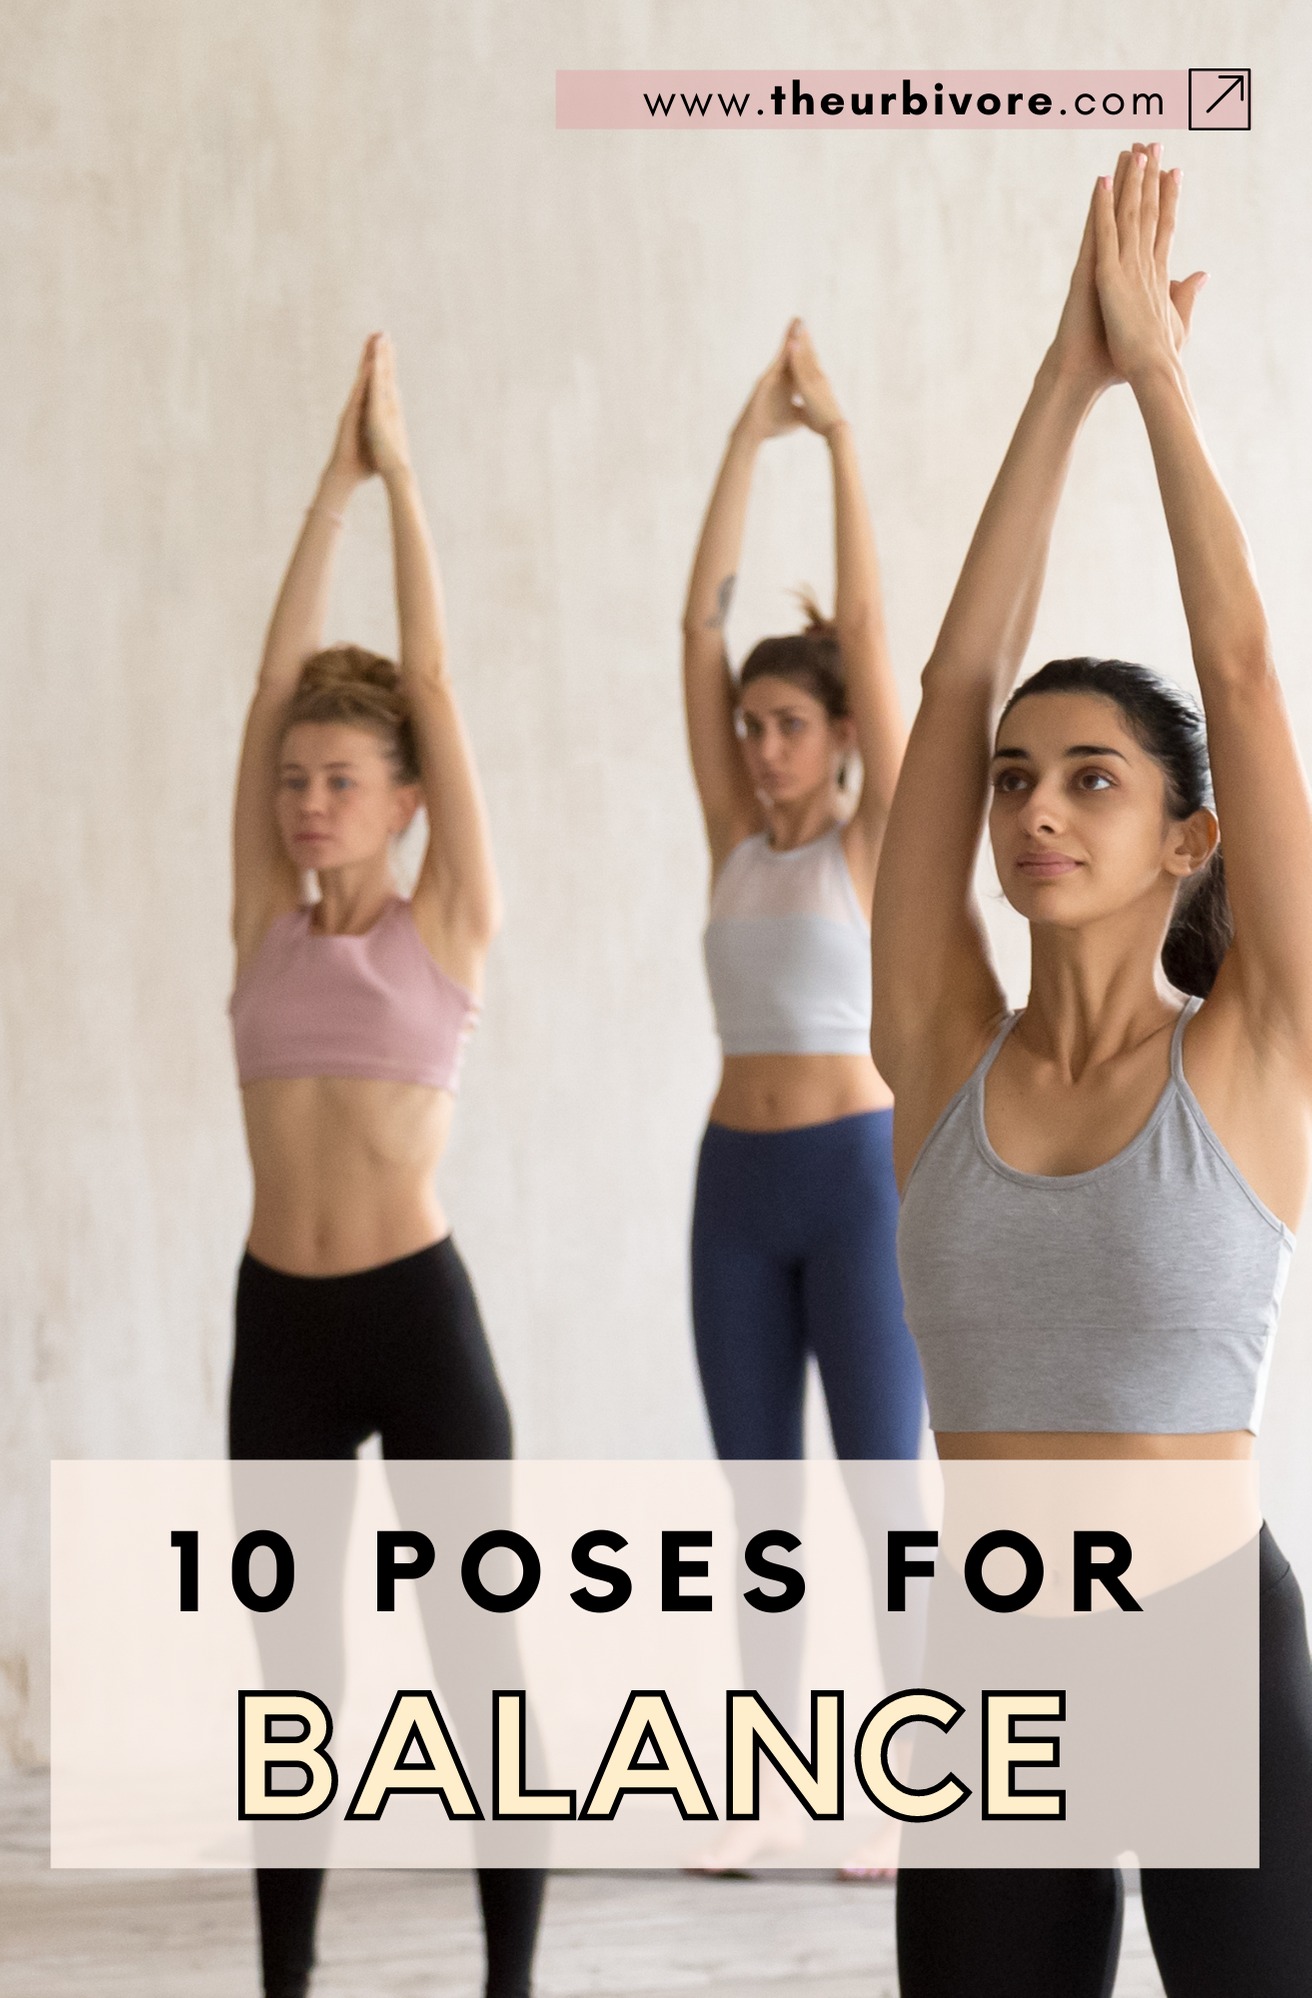 Yoga poses by Yogaasan - Issuu